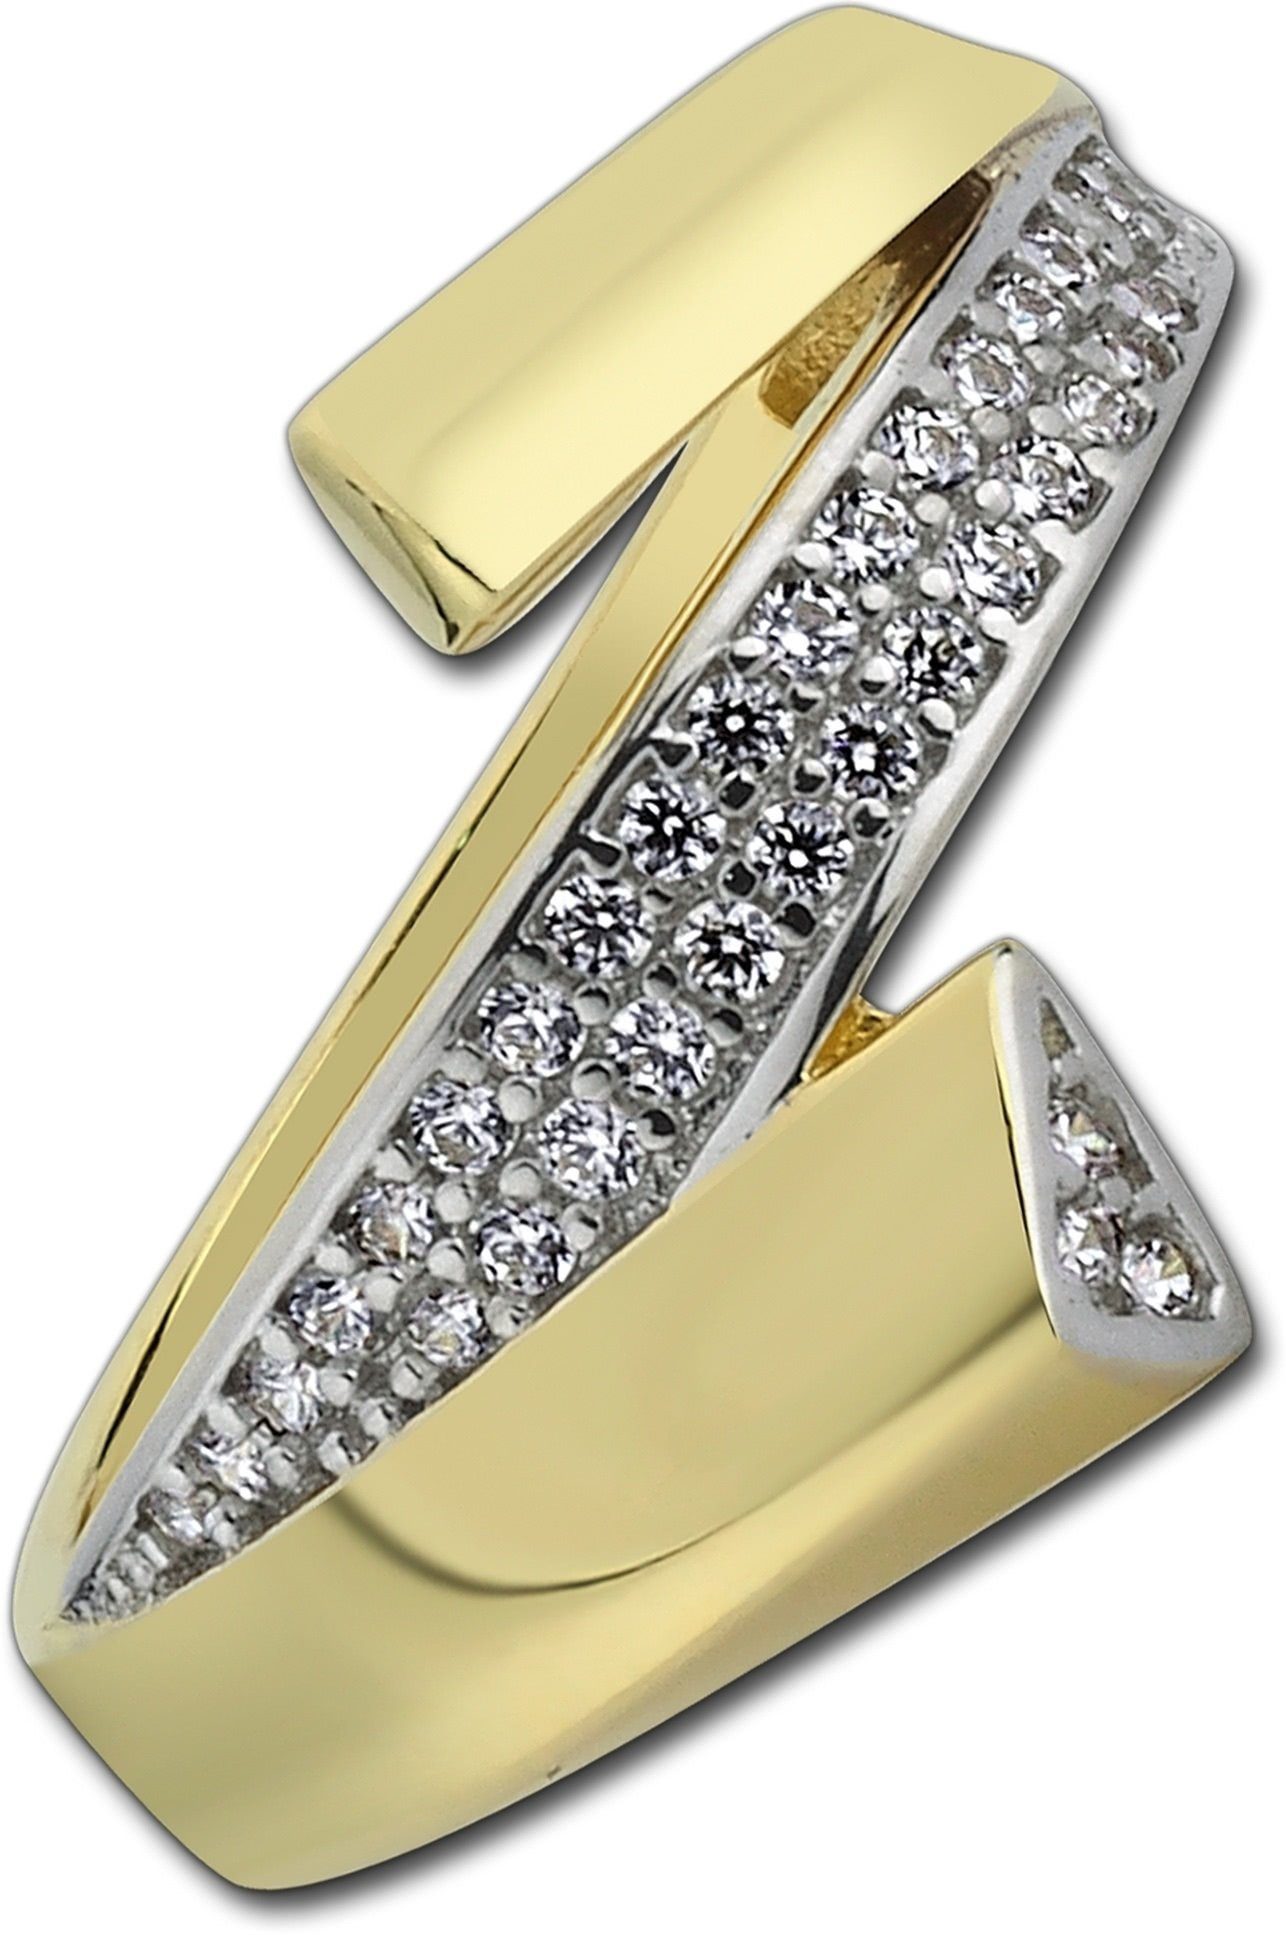 Balia Goldring Balia Damen Ring aus 333 Gelbgold (Fingerring), Fingerring Größe 58 (18,5), 333 Gelbgold - 8 Karat (Glamour gold) Gold